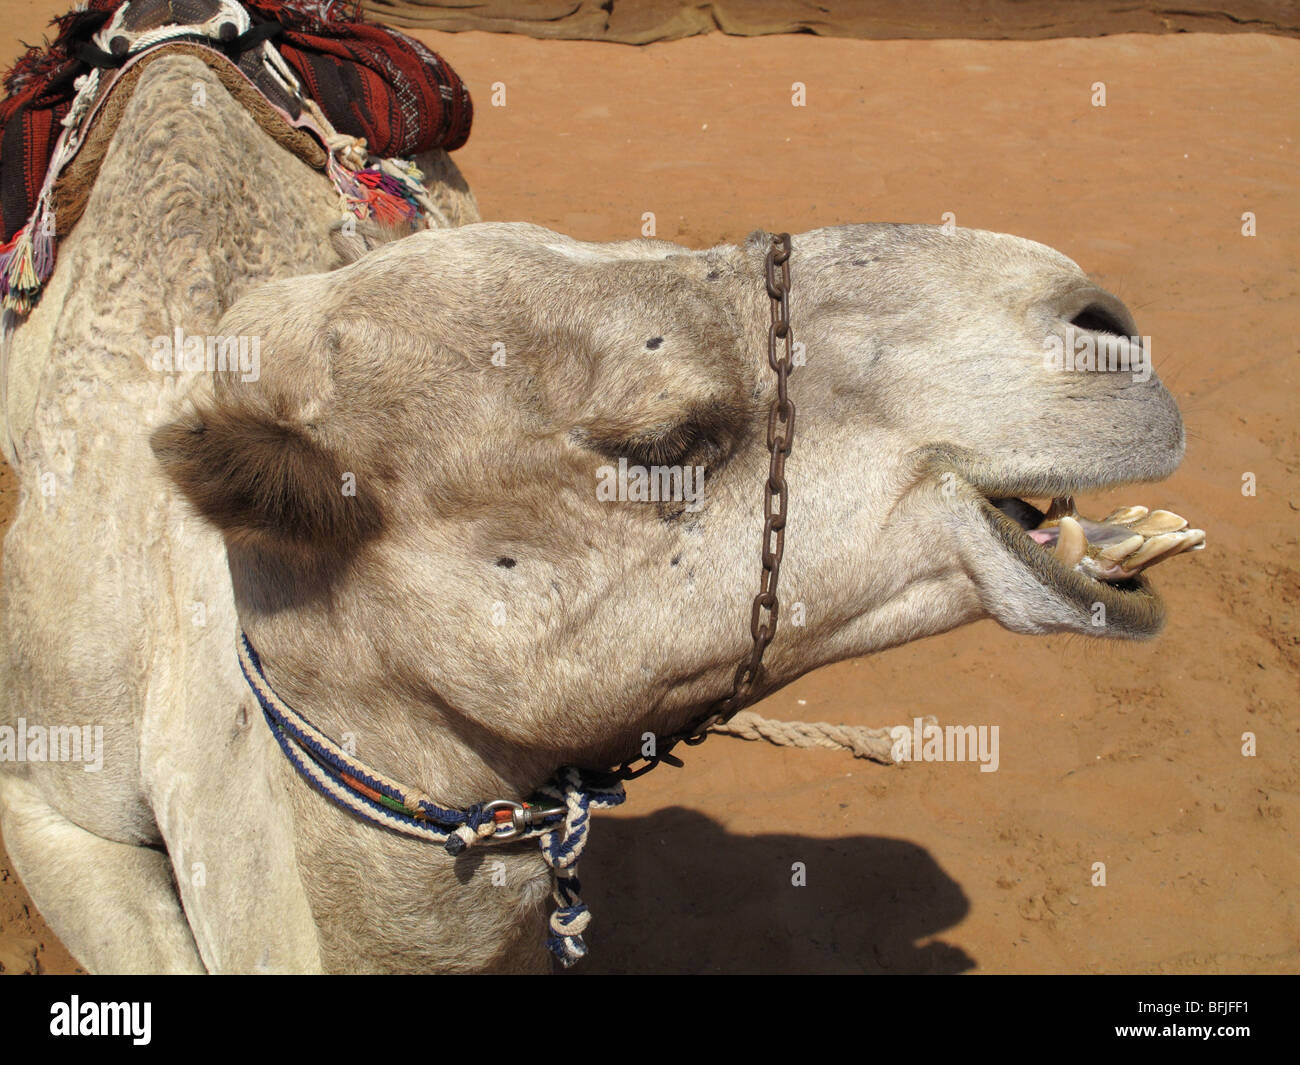 Head and teeth of a dromedary camel used for riding, Abu Dhabi, UAE Stock Photo